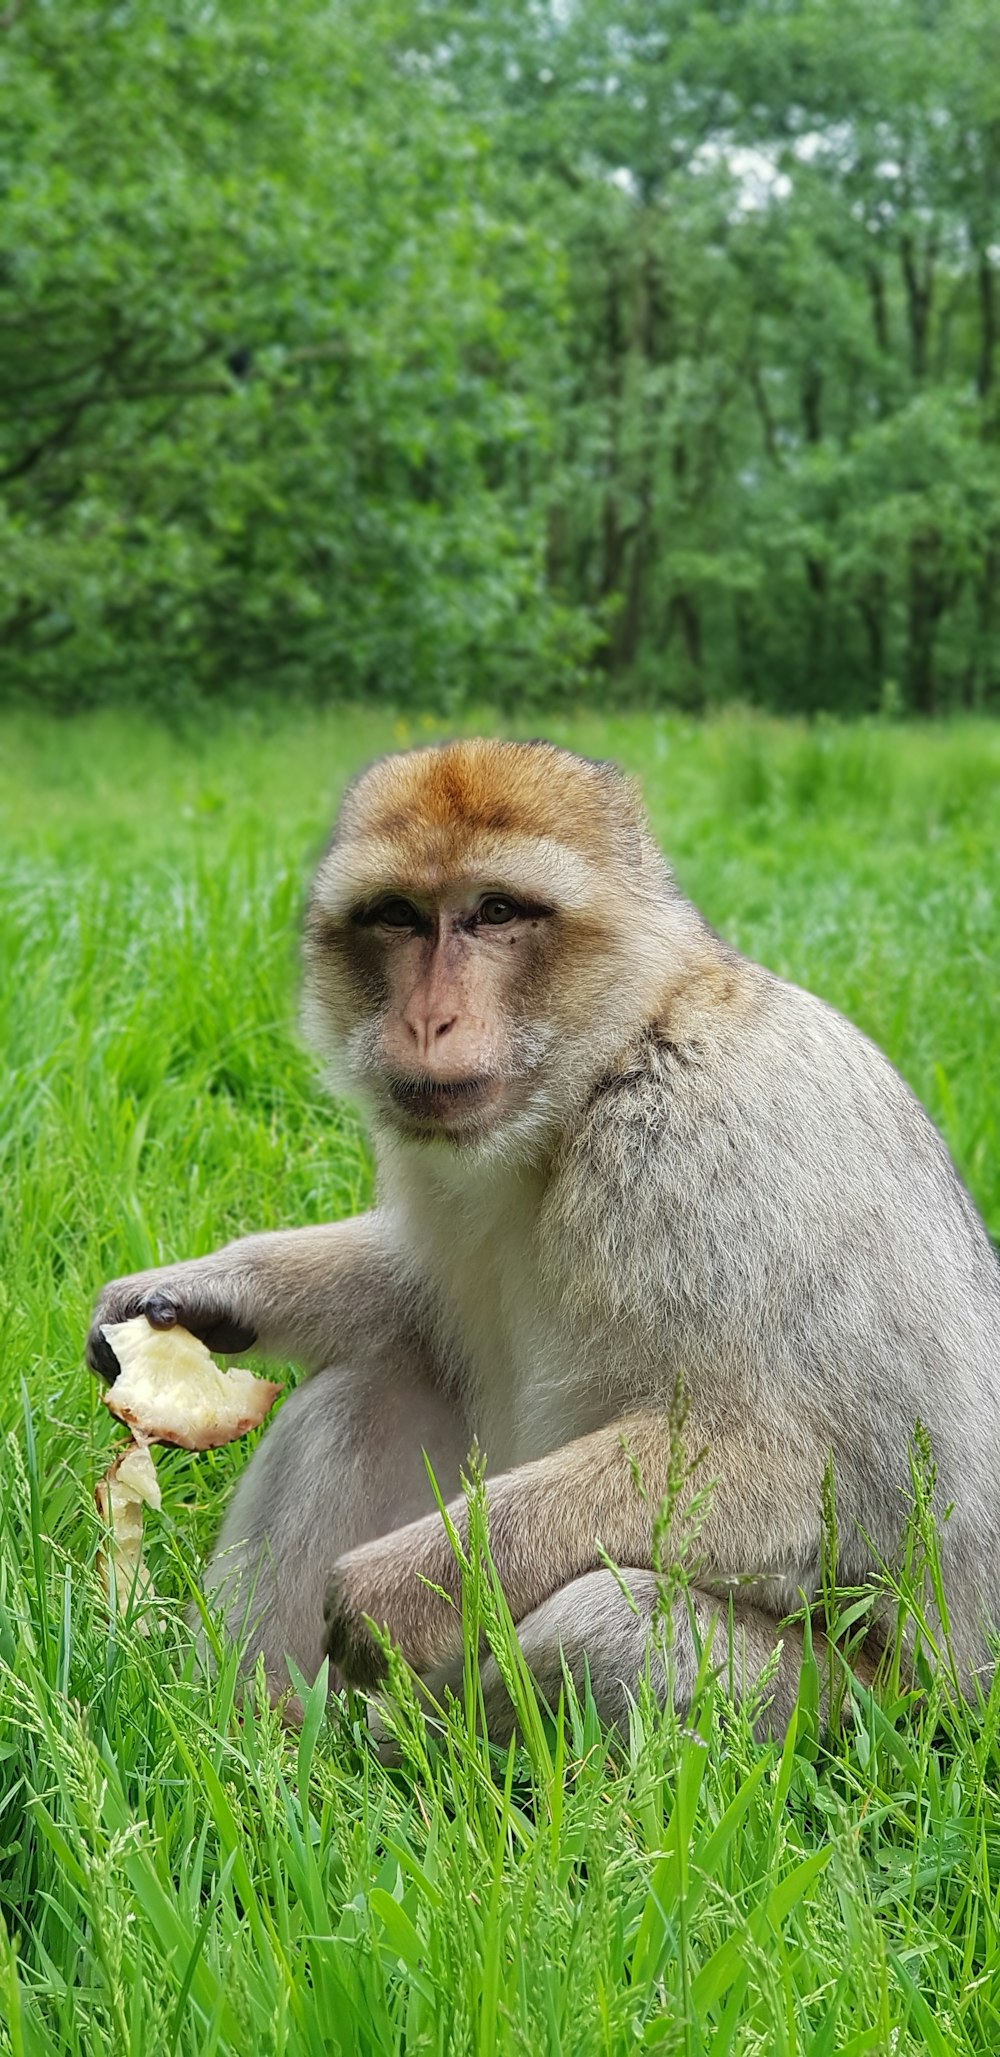 brown monkey eating banana on green grass during daytime